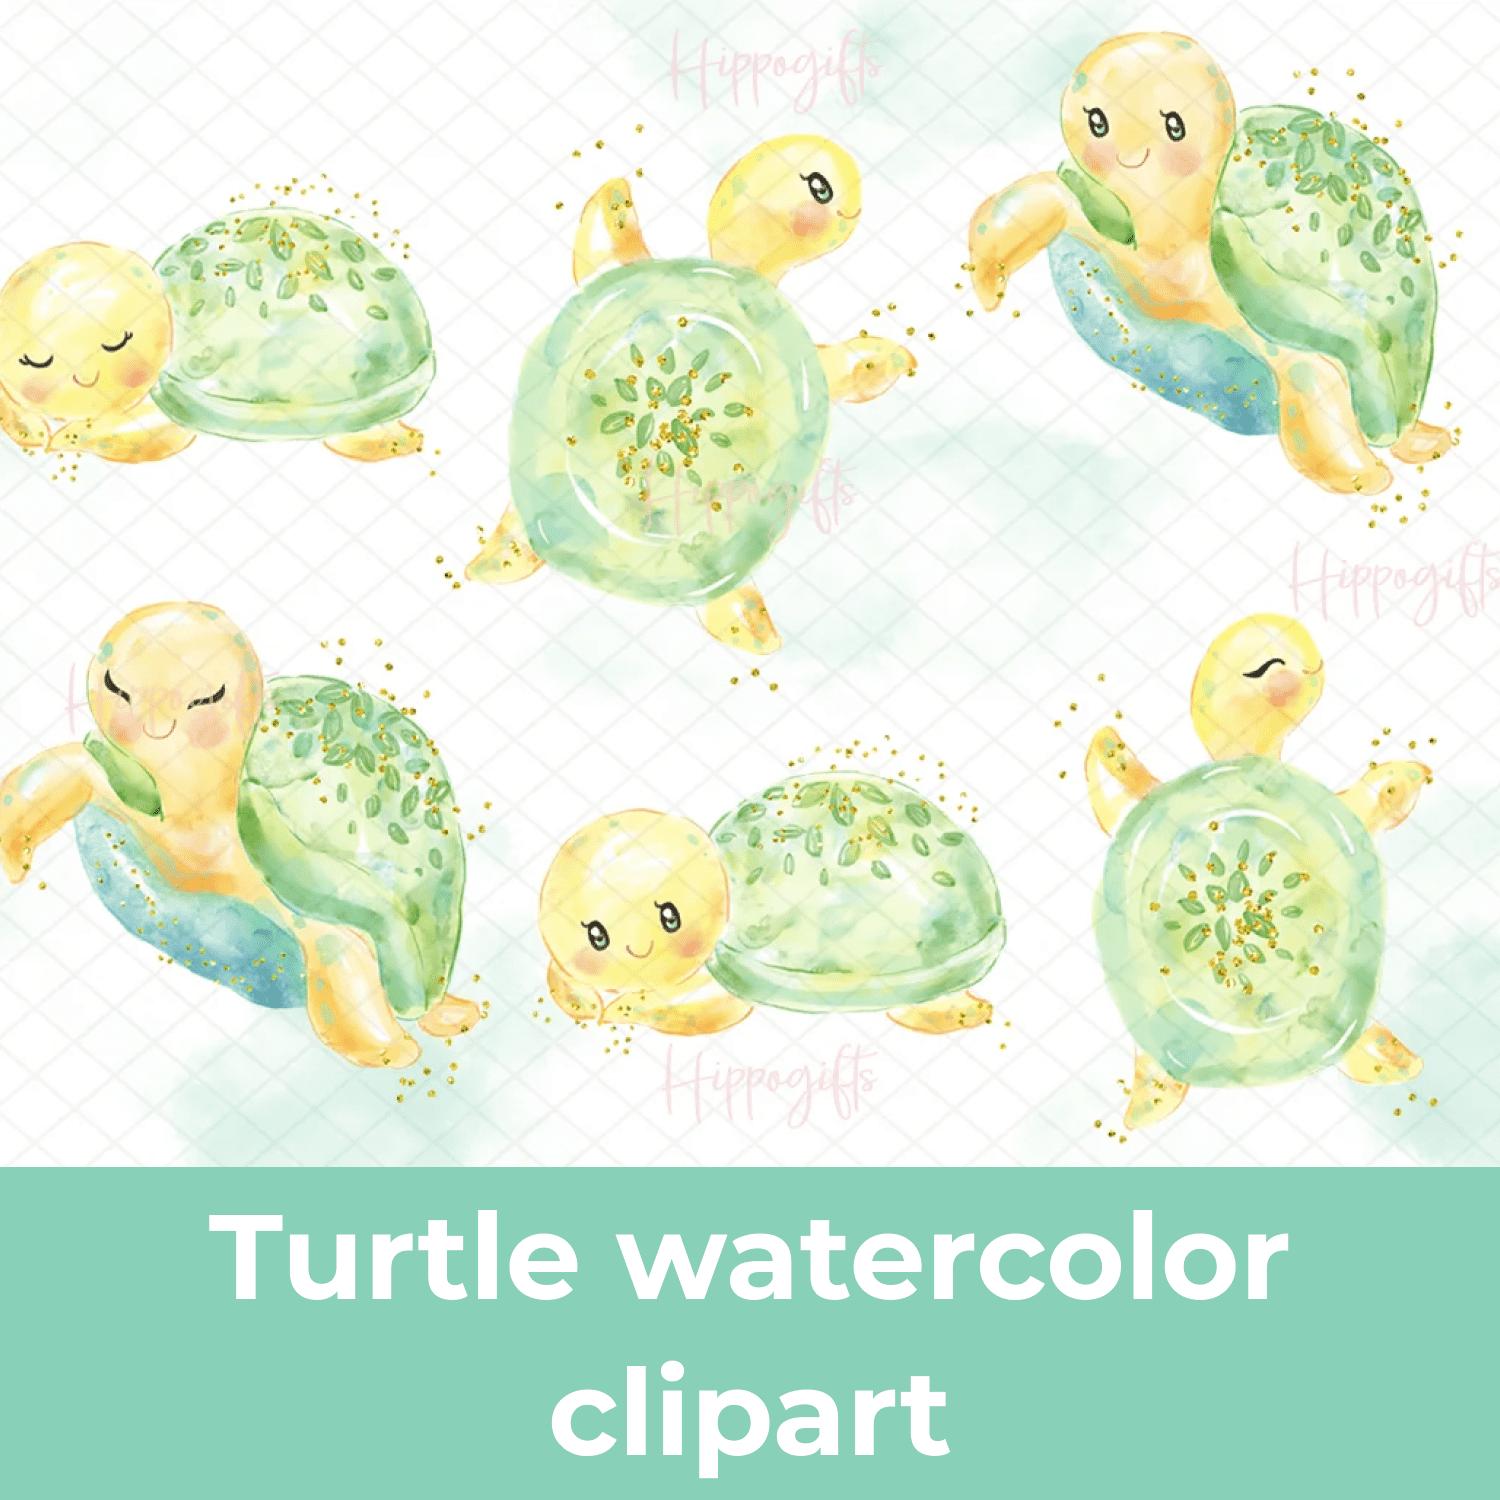 Turtle watercolor clipart cover.